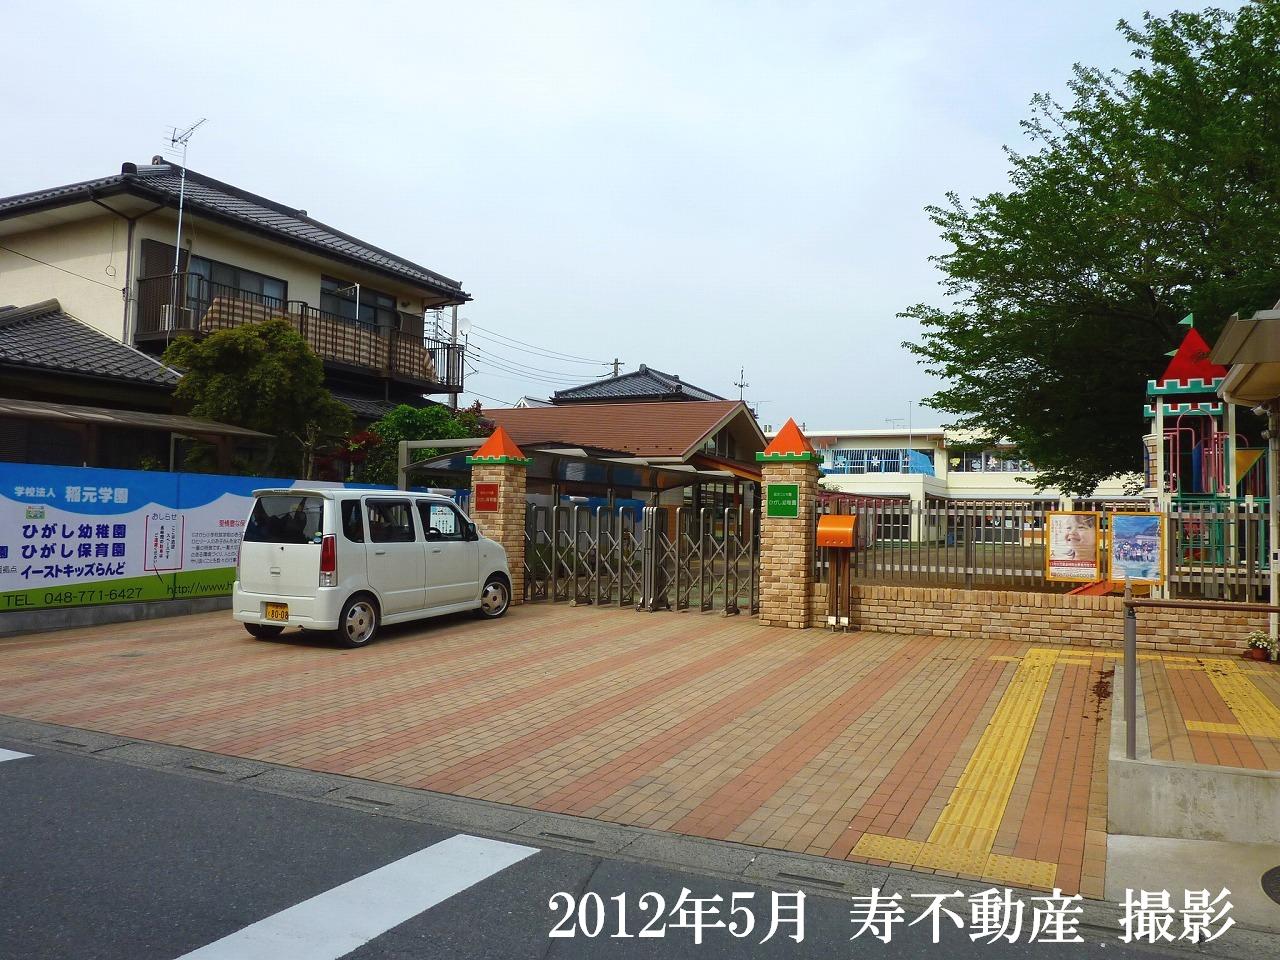 kindergarten ・ Nursery. Certified child Gardens east kindergarten (kindergarten ・ 503m to the nursery)